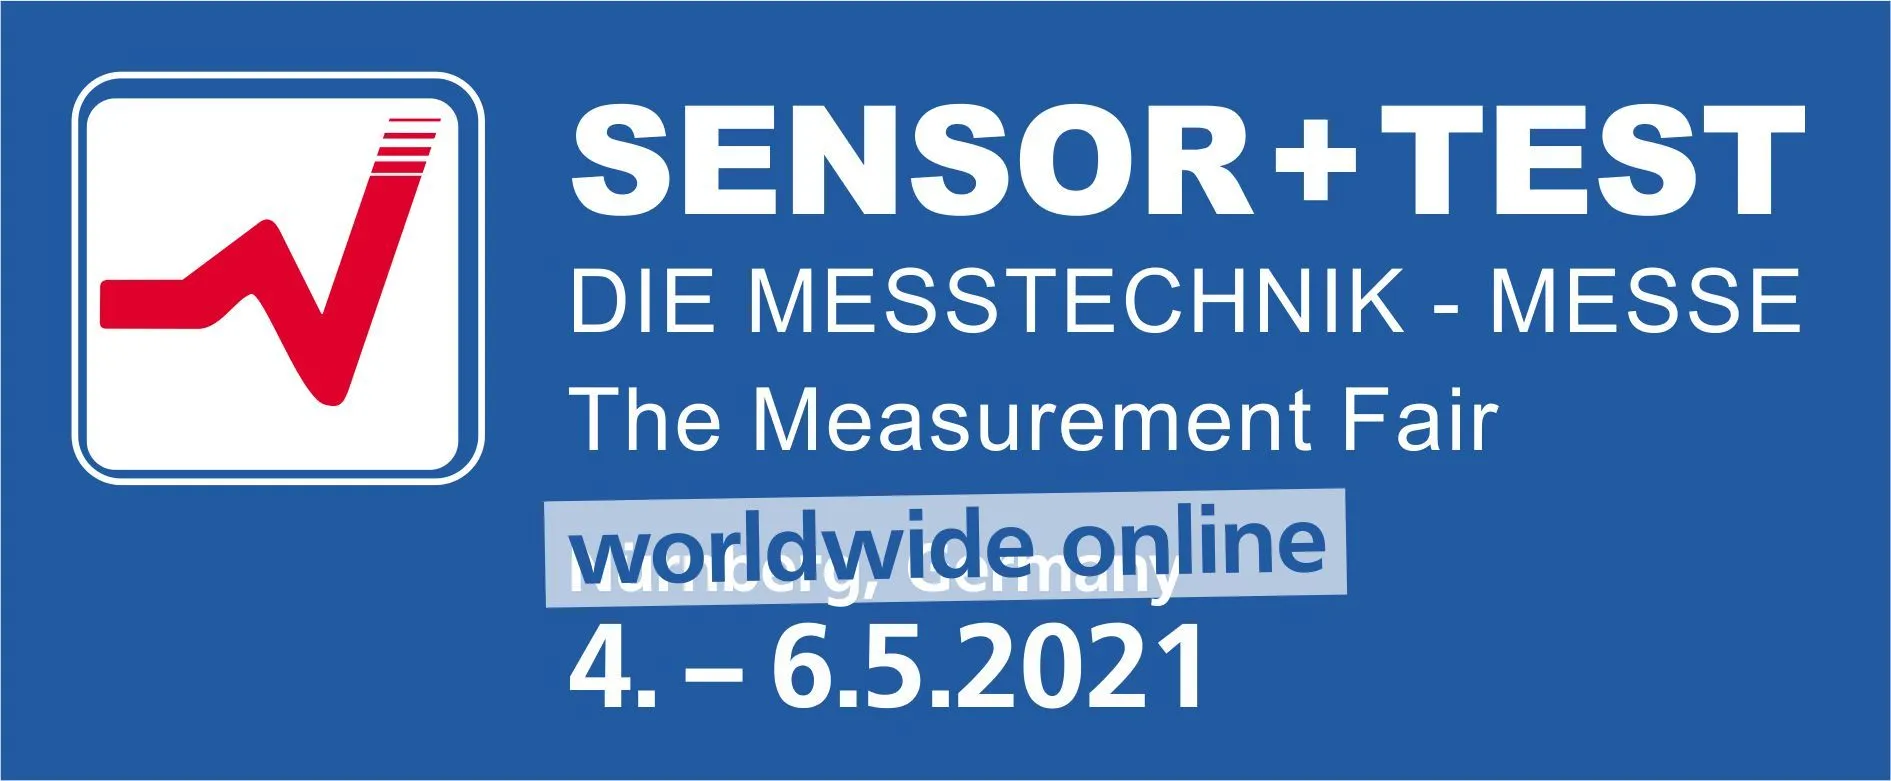 microsensor at sensortest exhibation